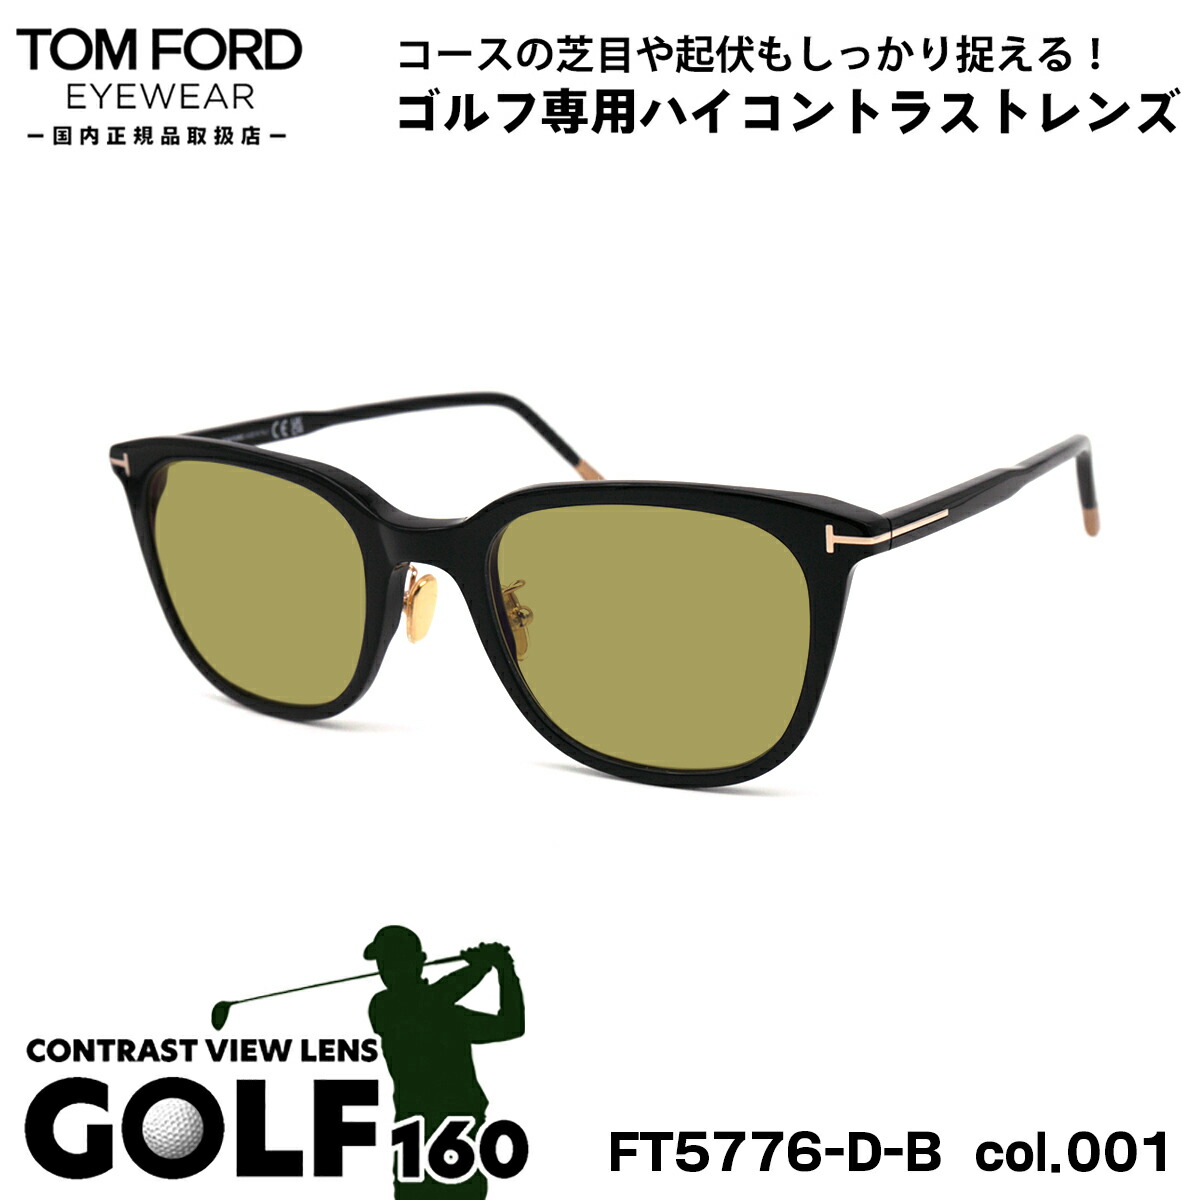 TG02 トムフォード 極美品 Adrenne メンズ サングラス TF517 トム